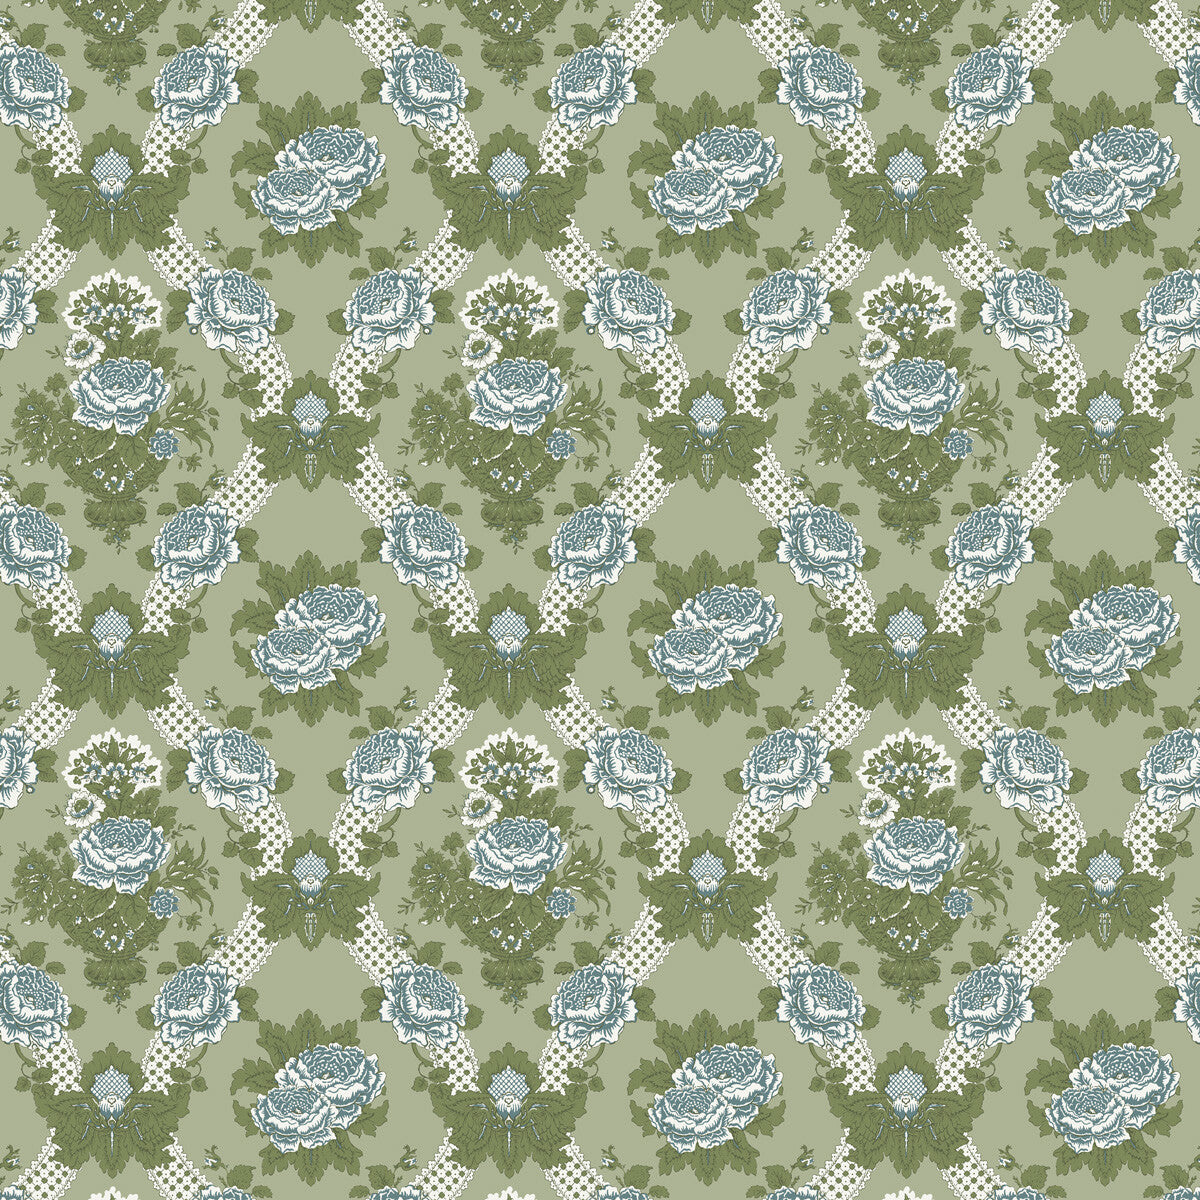 Aranchina fabric in verde color - pattern LCT1058.002.0 - by Gaston y Daniela in the Lorenzo Castillo VI collection